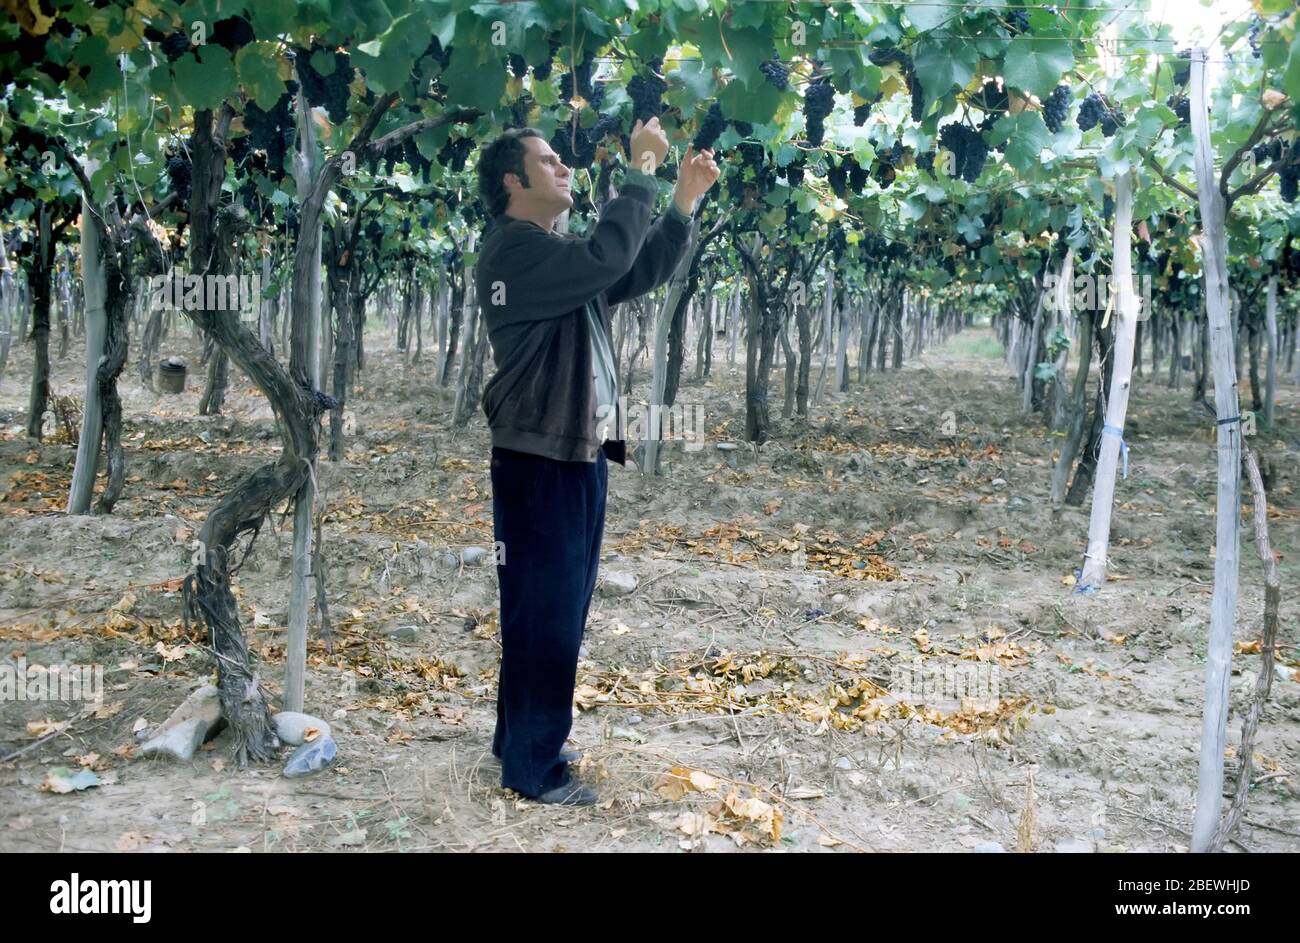 Man checks vines in vinyard, Mendoza, Argentina Stock Photo